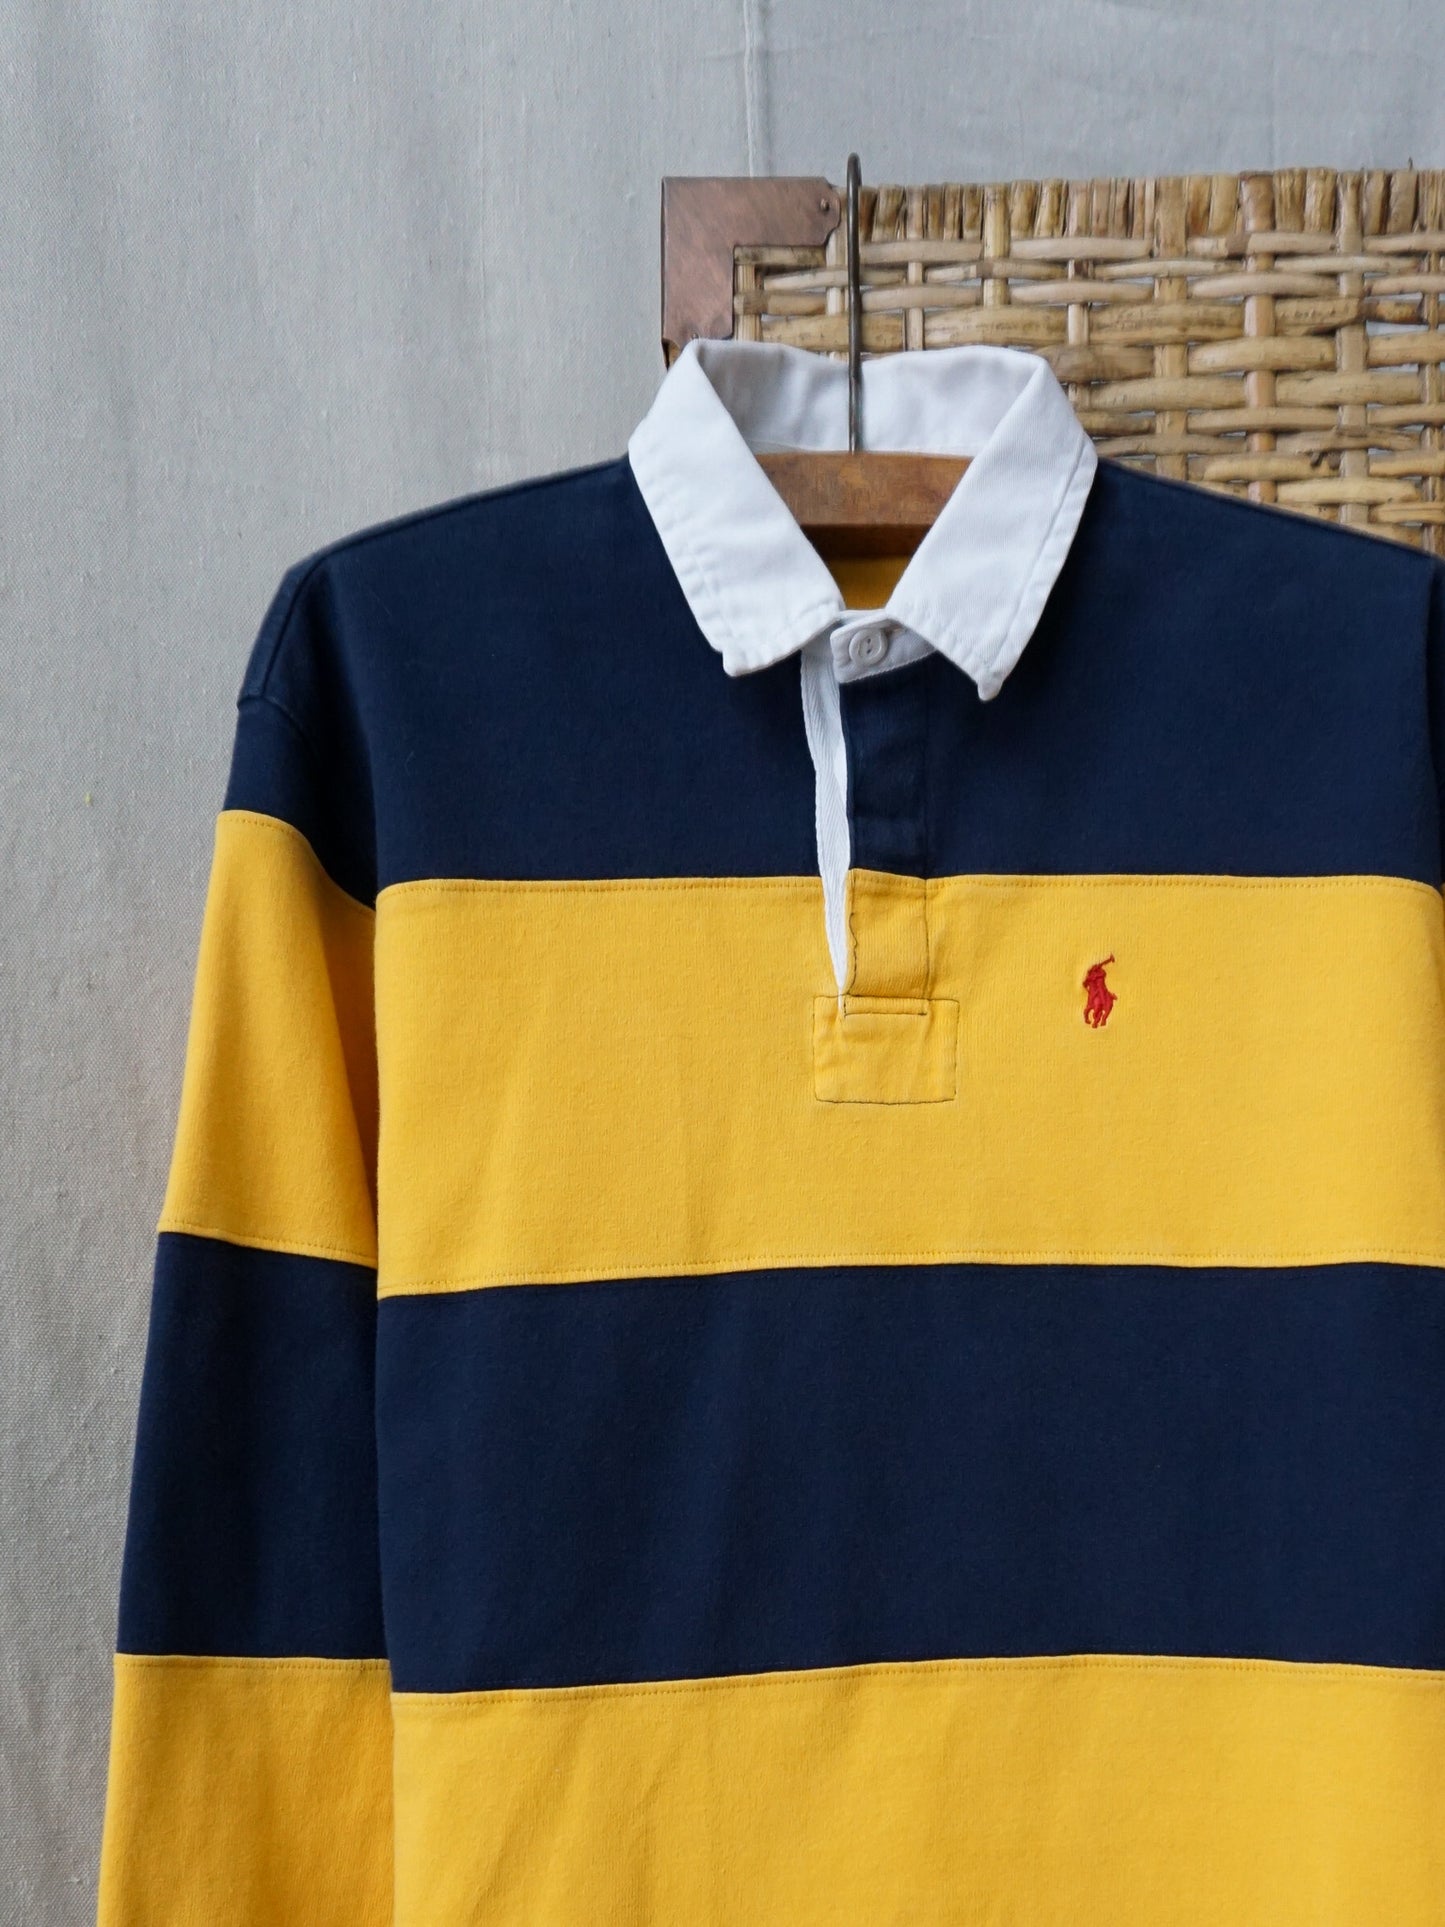 Polo Ralph Lauren Striped Rugby Shirt—[M]